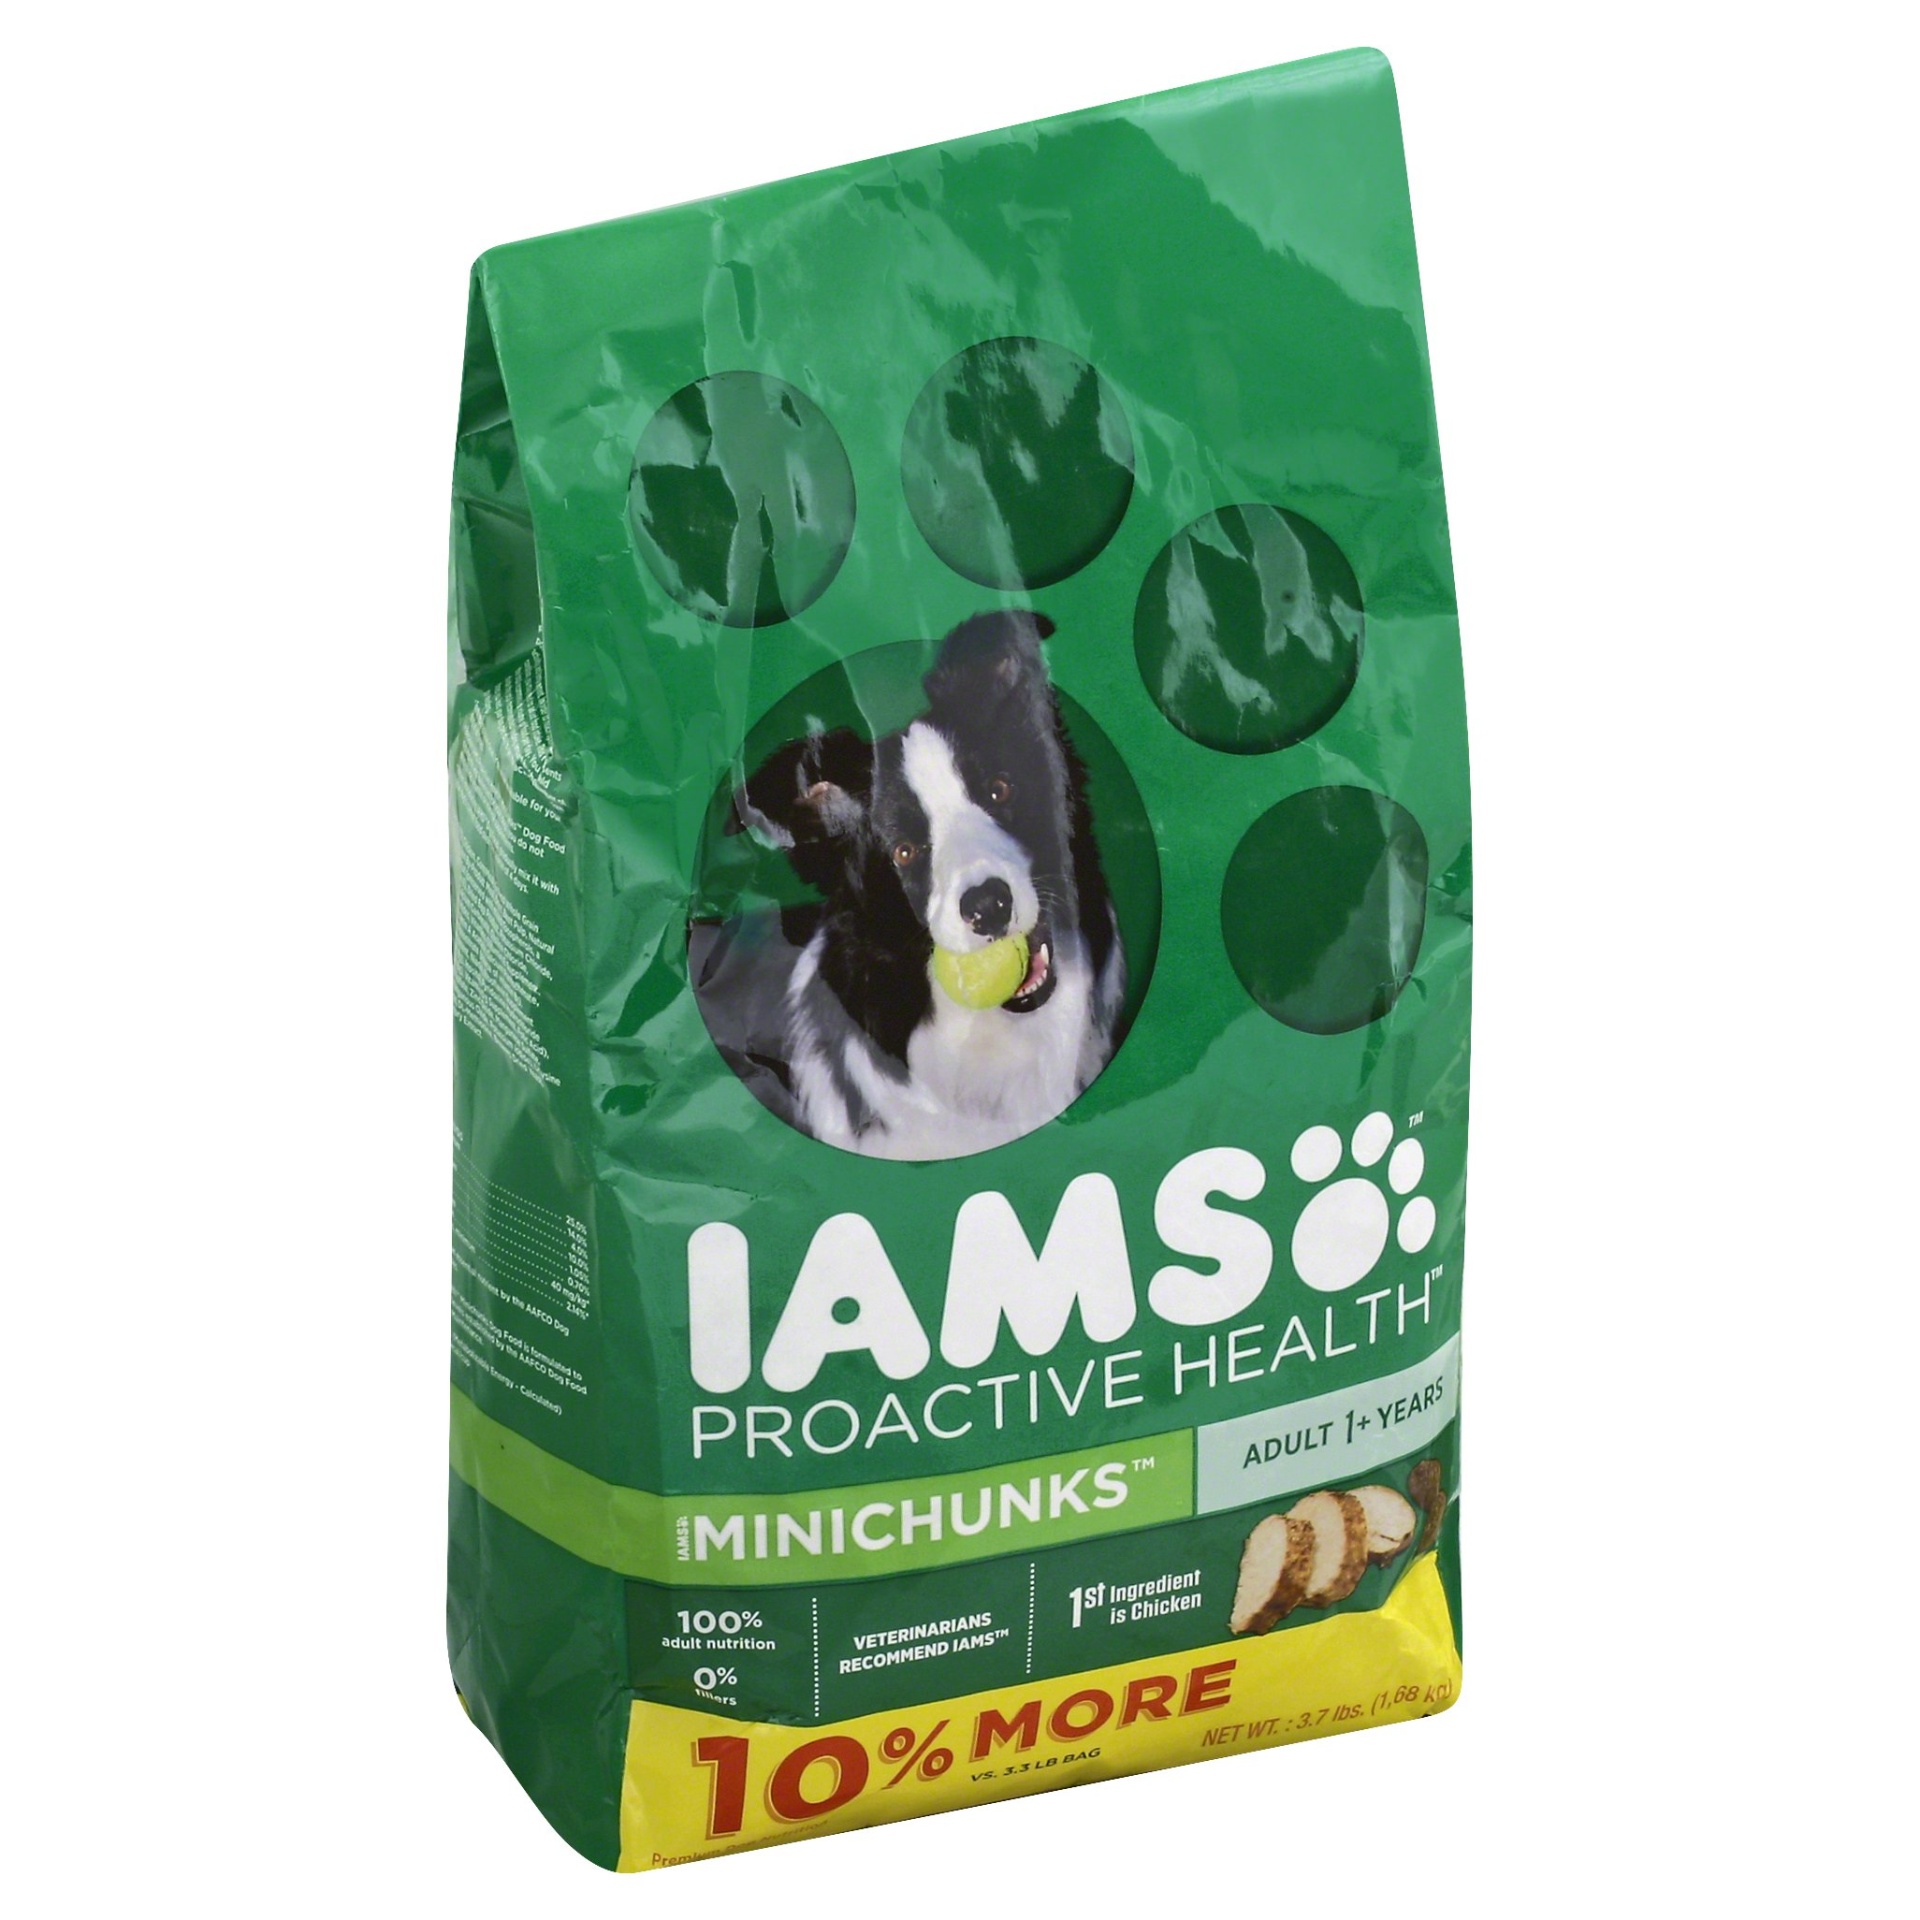 slide 1 of 6, IAMS Dog Nutrition, Premium, Minichunks, Adult 1+ Years, 3.7 lb